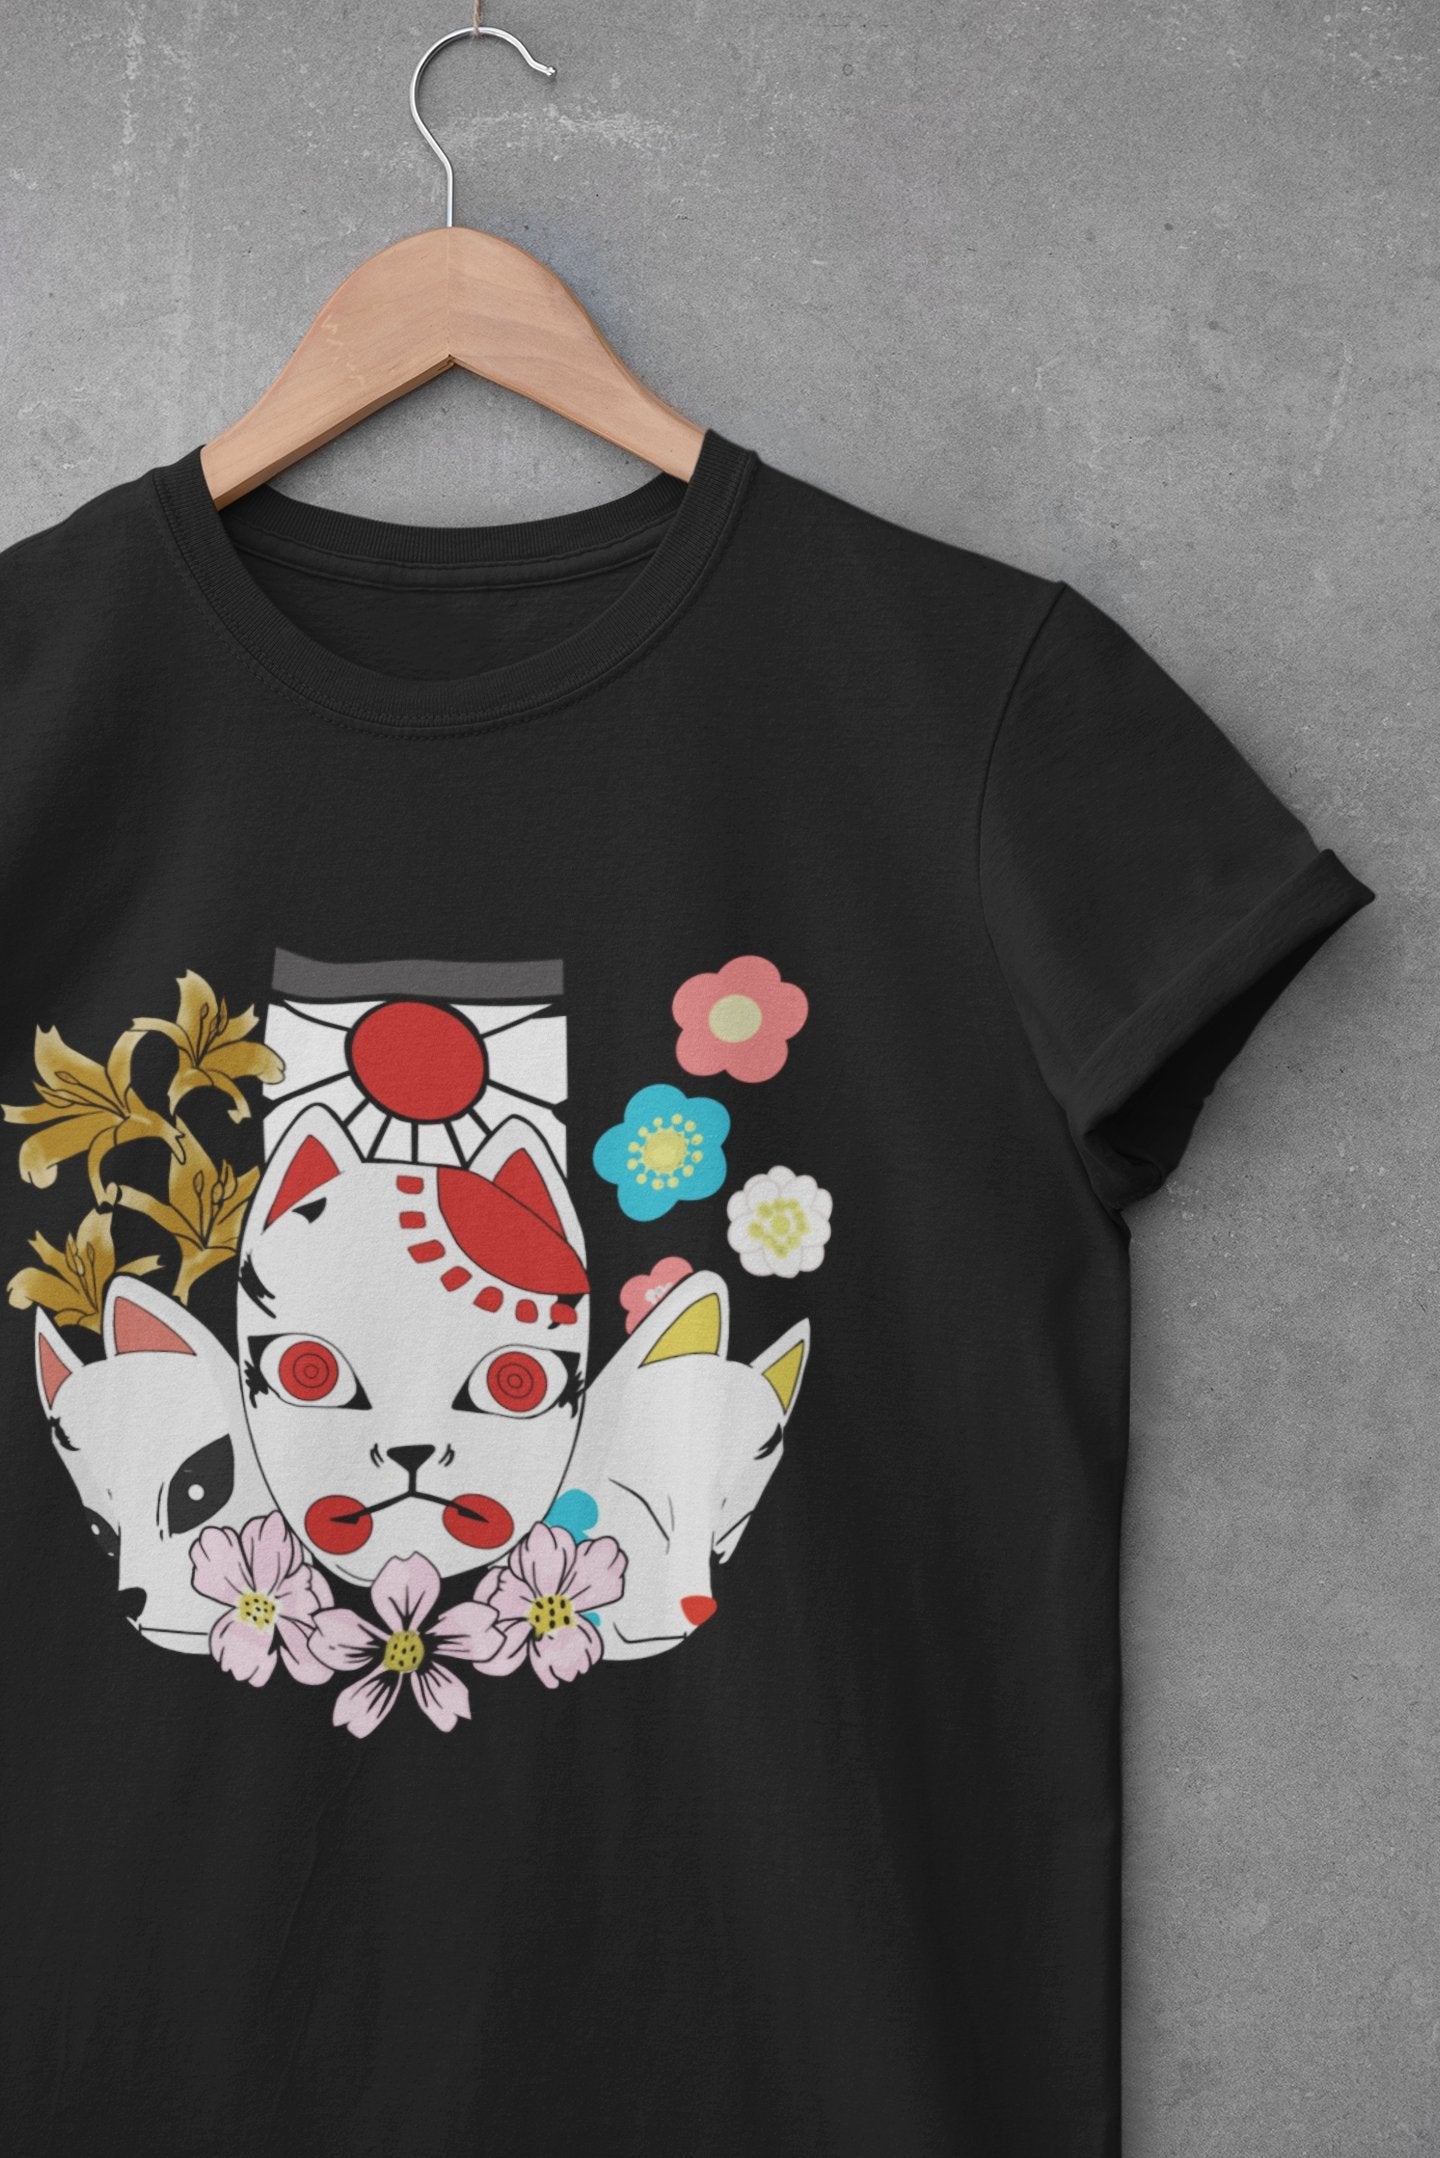 Sakonji's Grief - T-Shirt - Project NuMa - T-Shirt